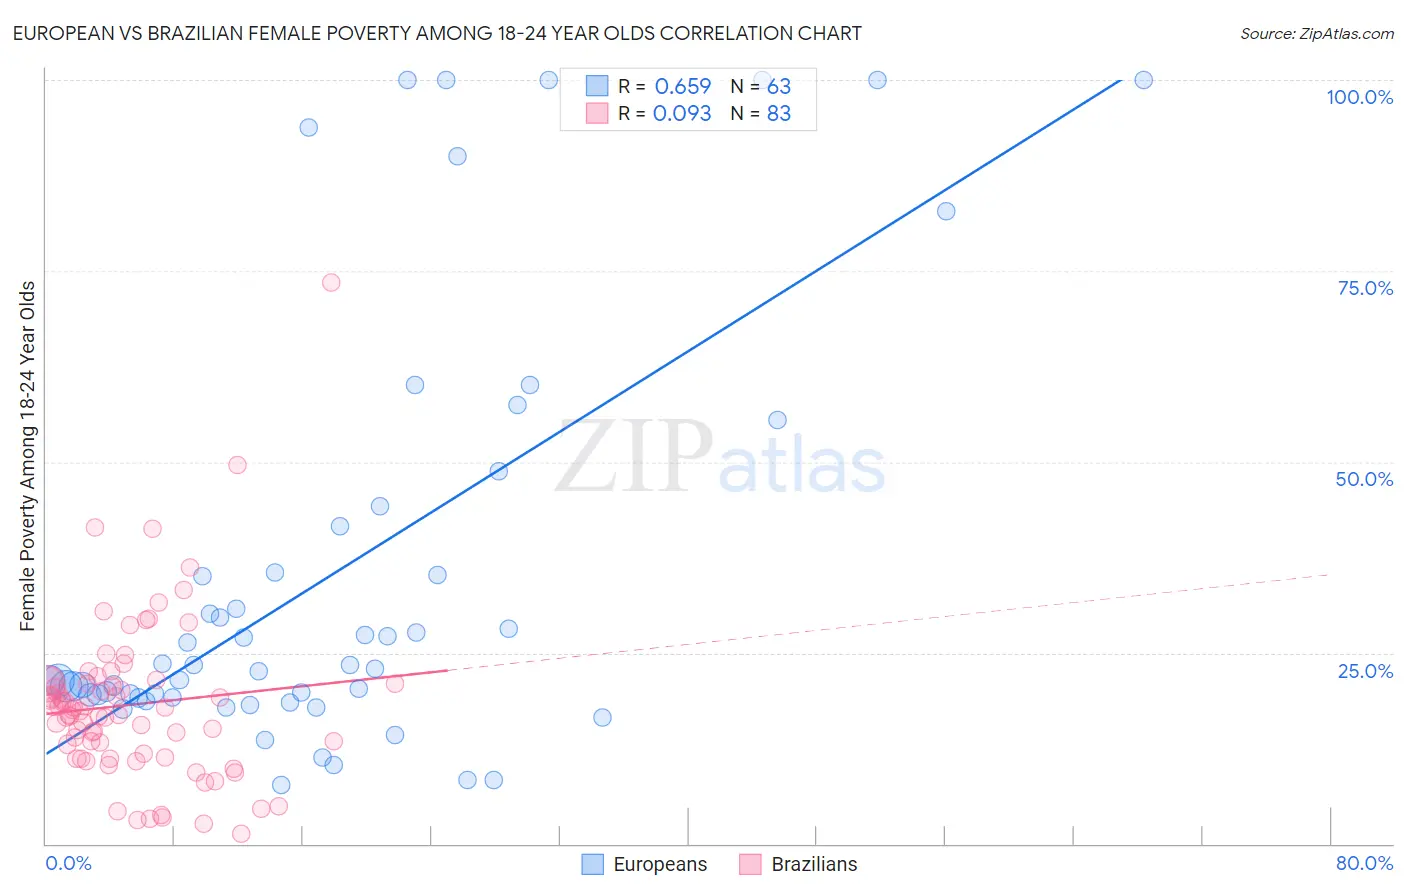 European vs Brazilian Female Poverty Among 18-24 Year Olds